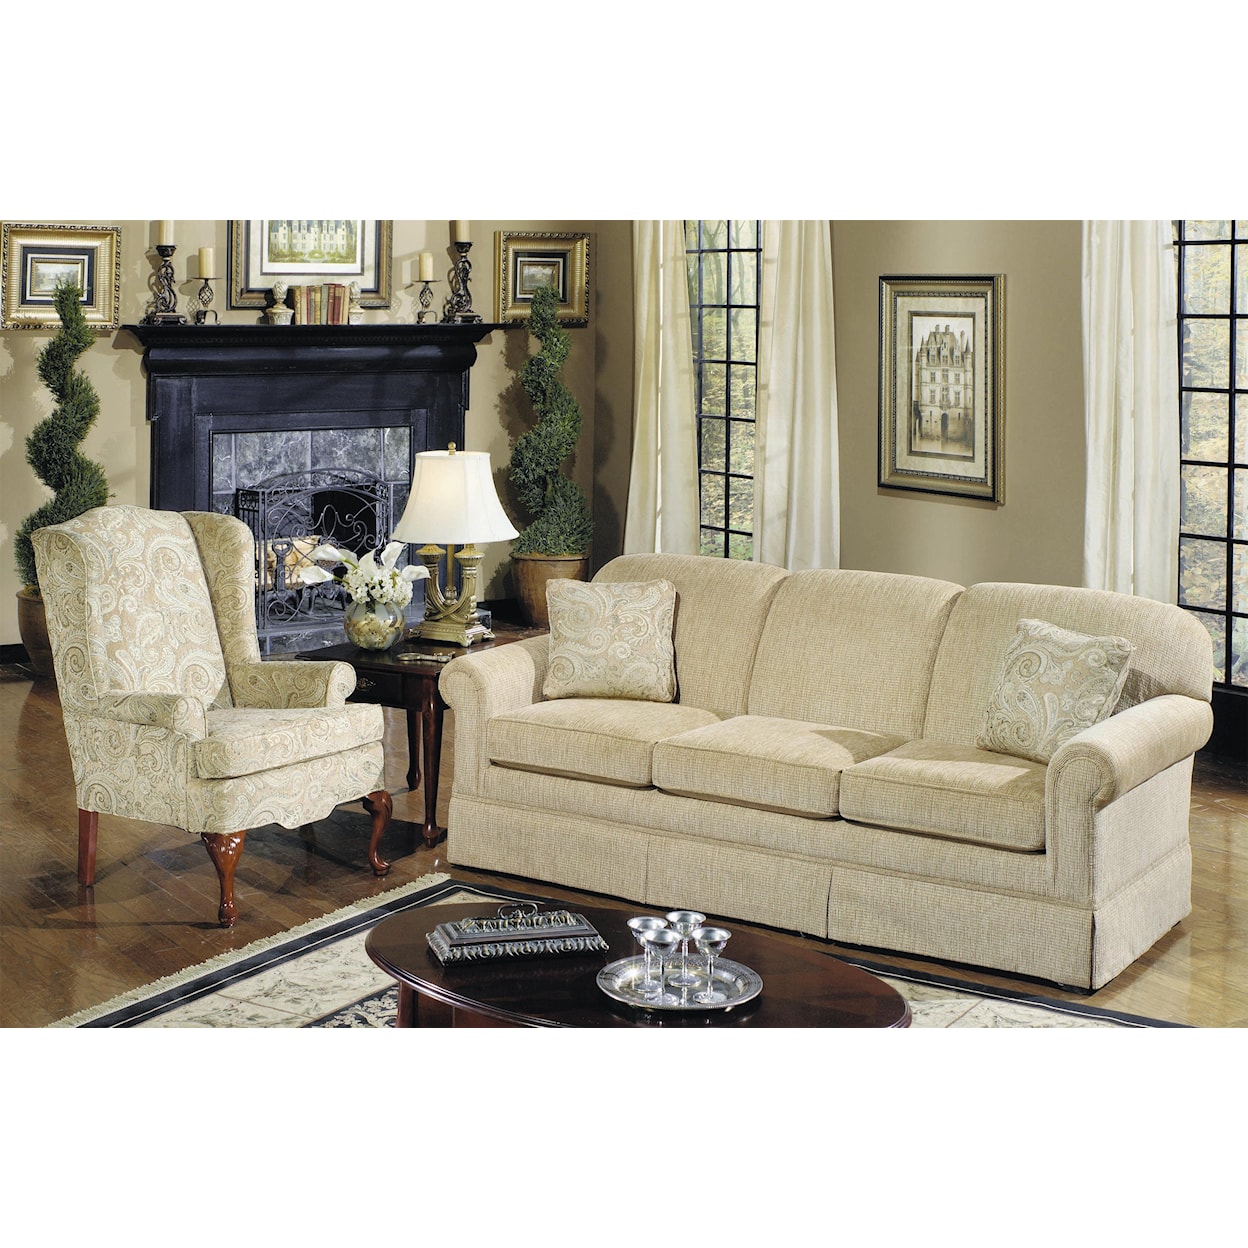 Hickory Craft 4200 Stationary Sleeper Sofa